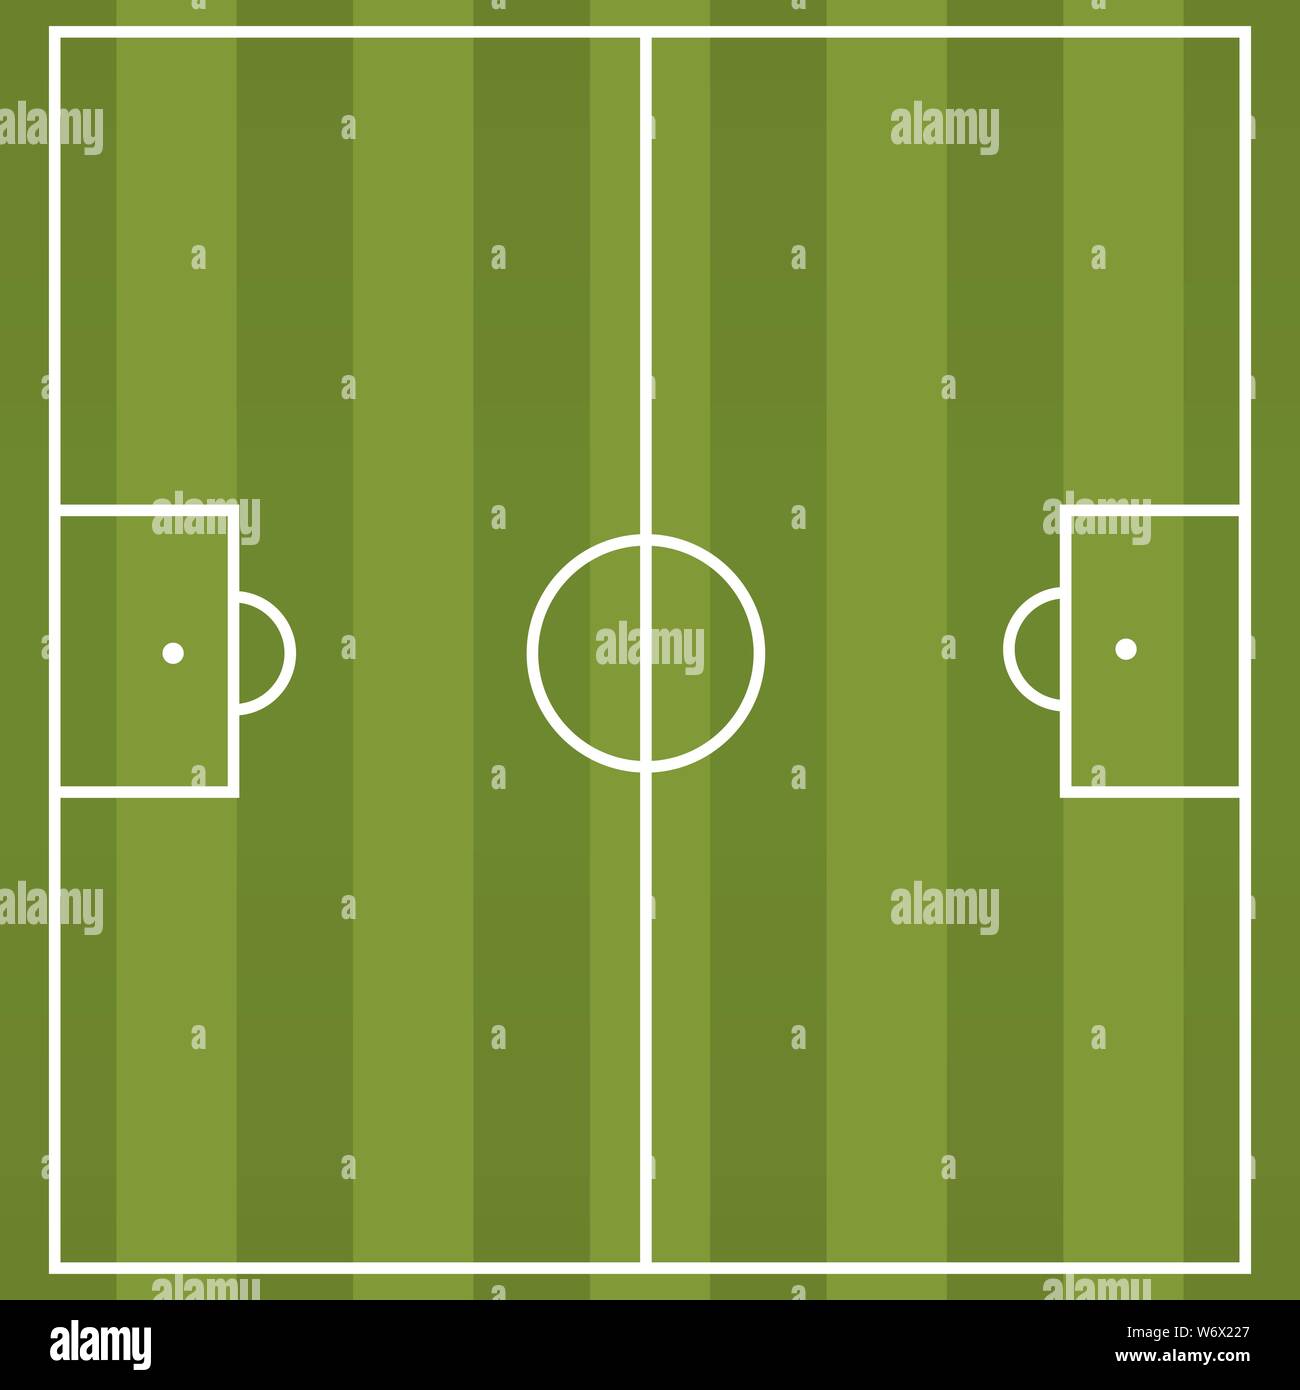 football field background illustration vector. Stock Vector